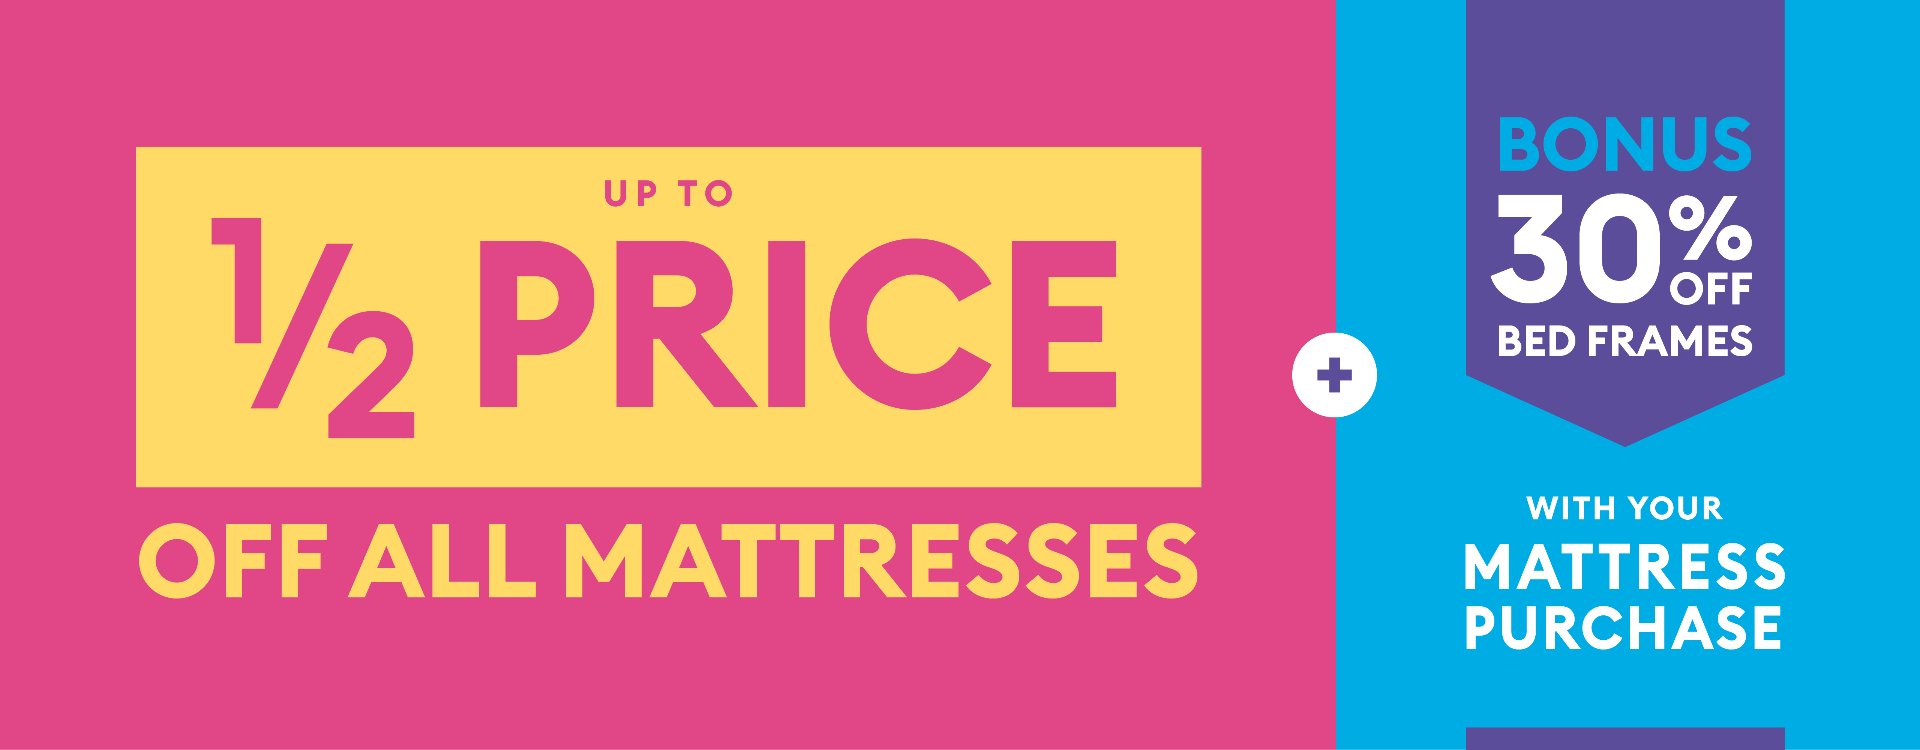 half price mattress venice florida